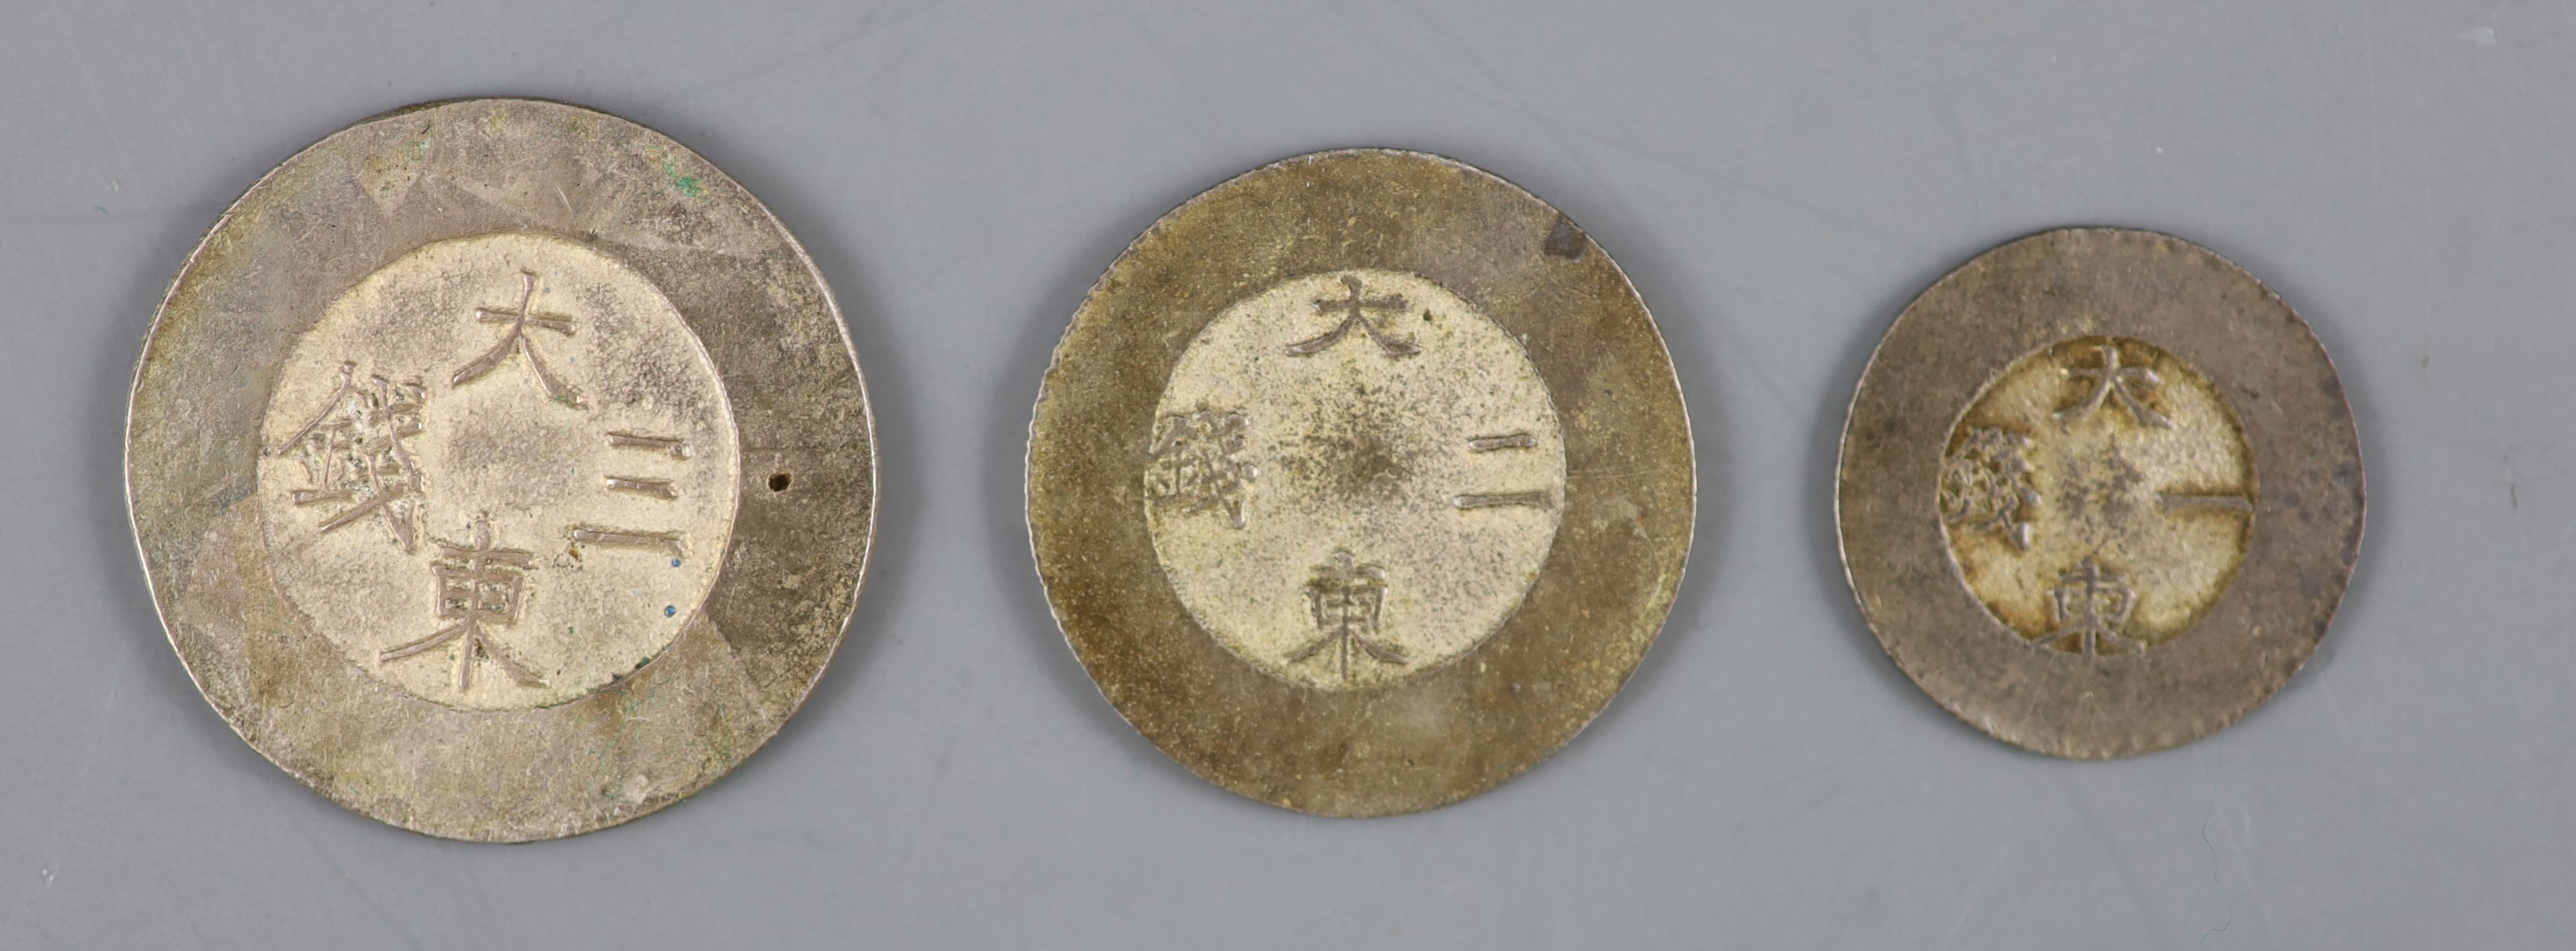 Korea coins, Tae Dong Treasury Department (1882-3) 3 Chon, KM1083, 2 Chon, KM1082 and 1 Chon, KM0181, scarce